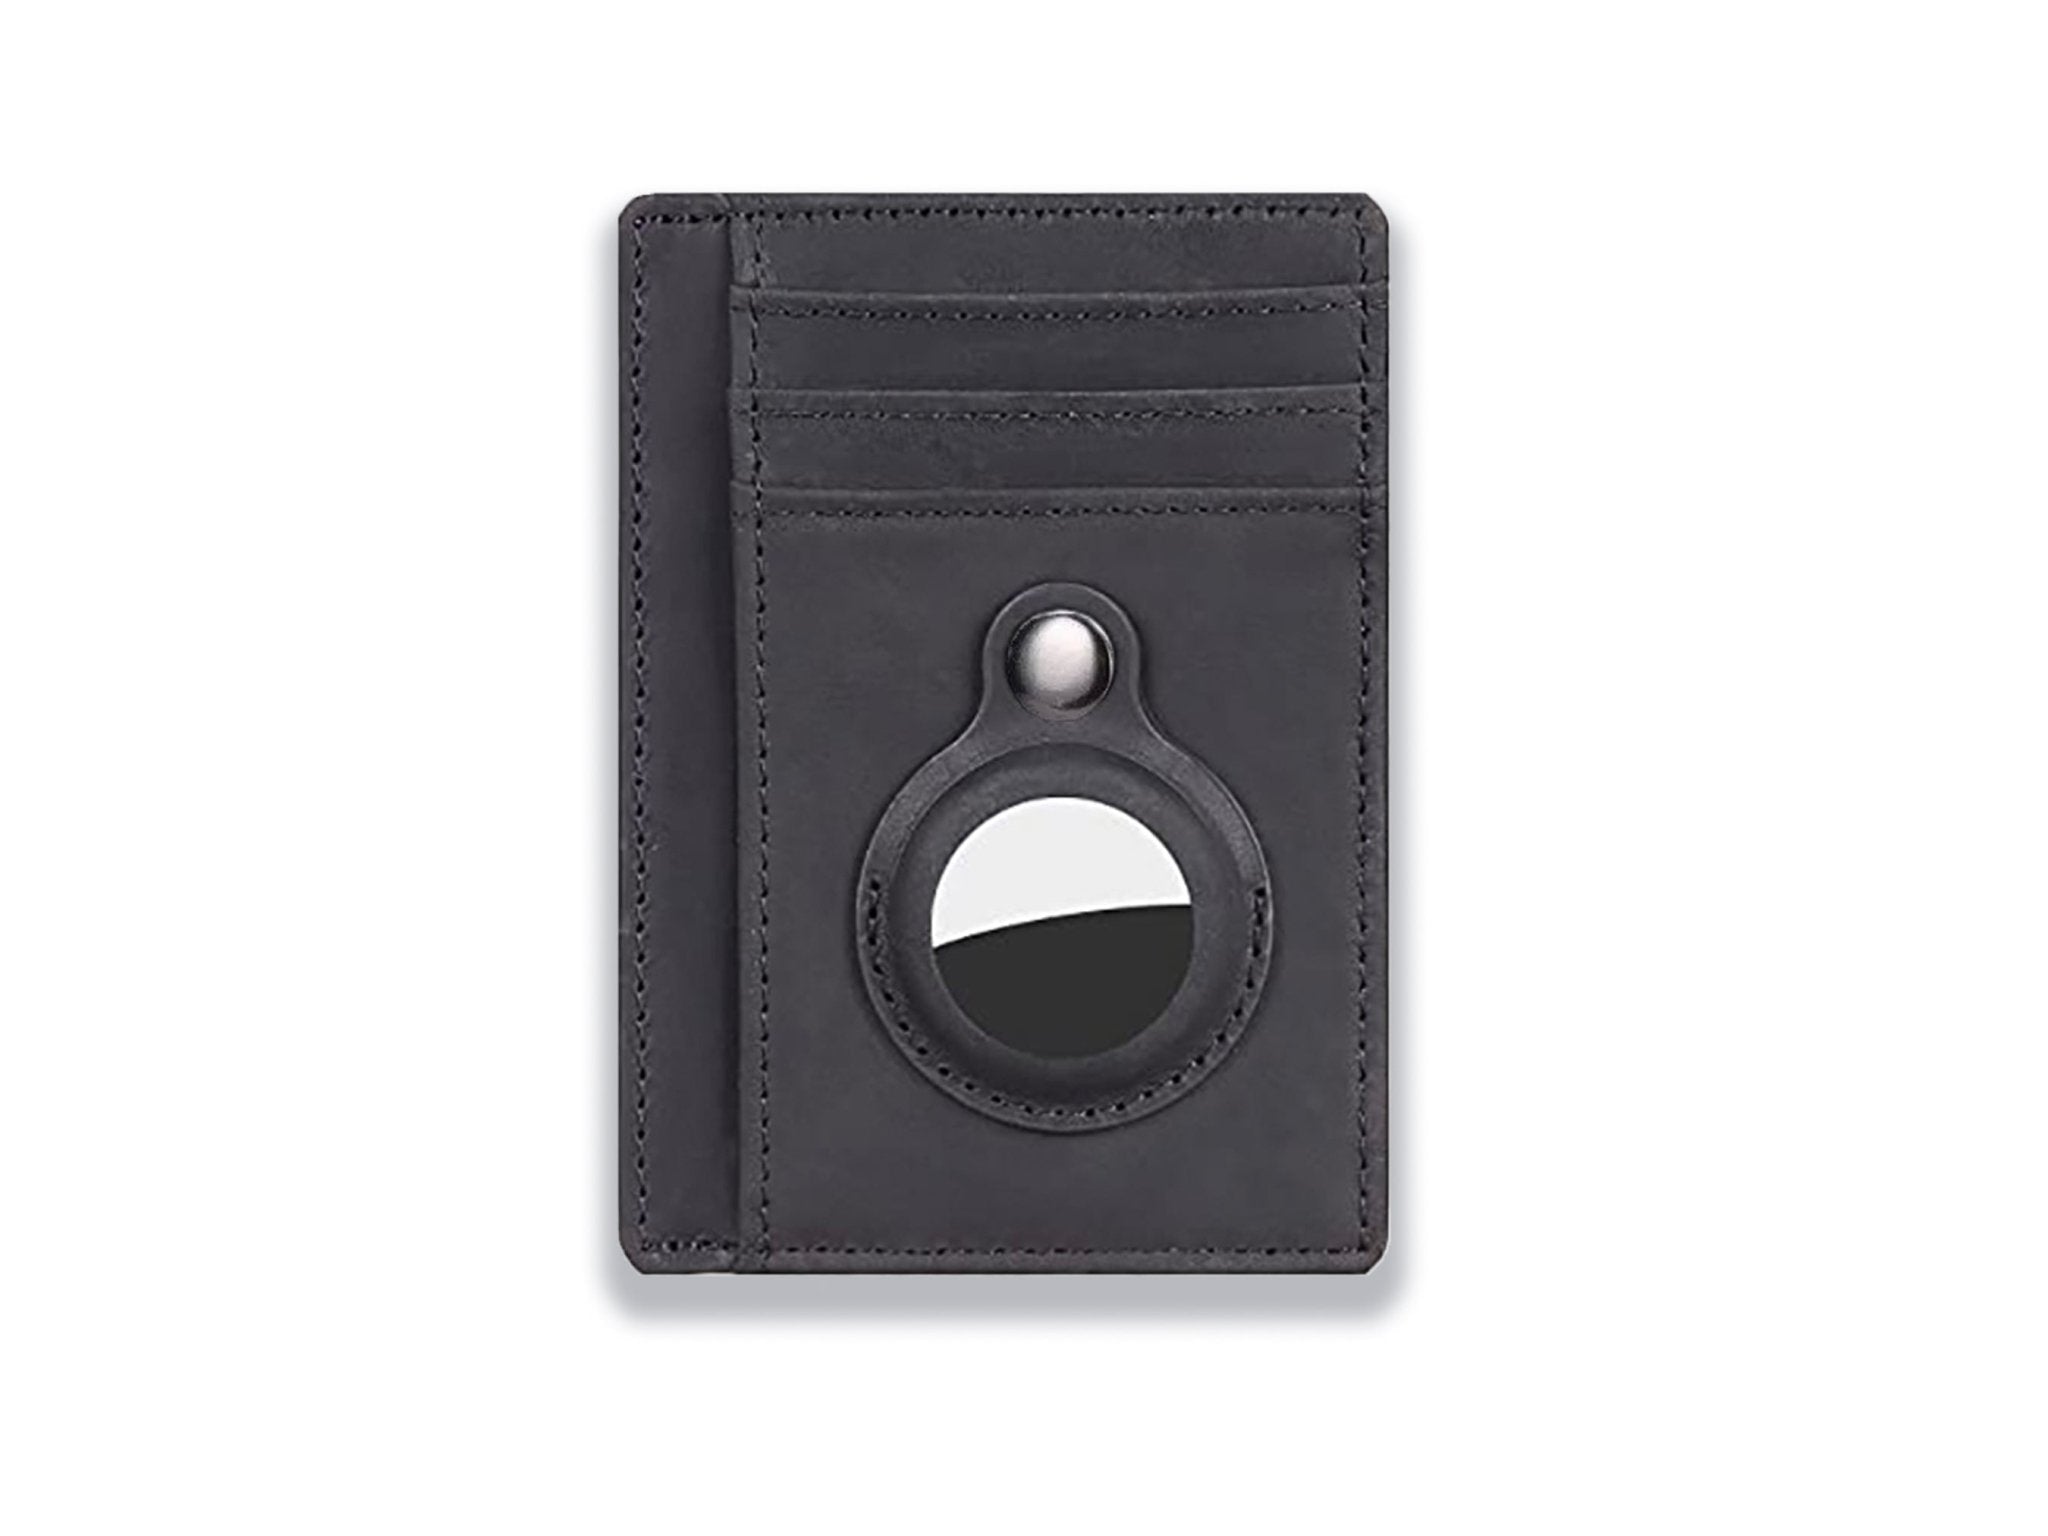 AirTag Minimalist Slim Wallet | Genuine Leather Wallet | RFID Wallet | Leather Card Holder Wallets Black  Accessories Gifts UK